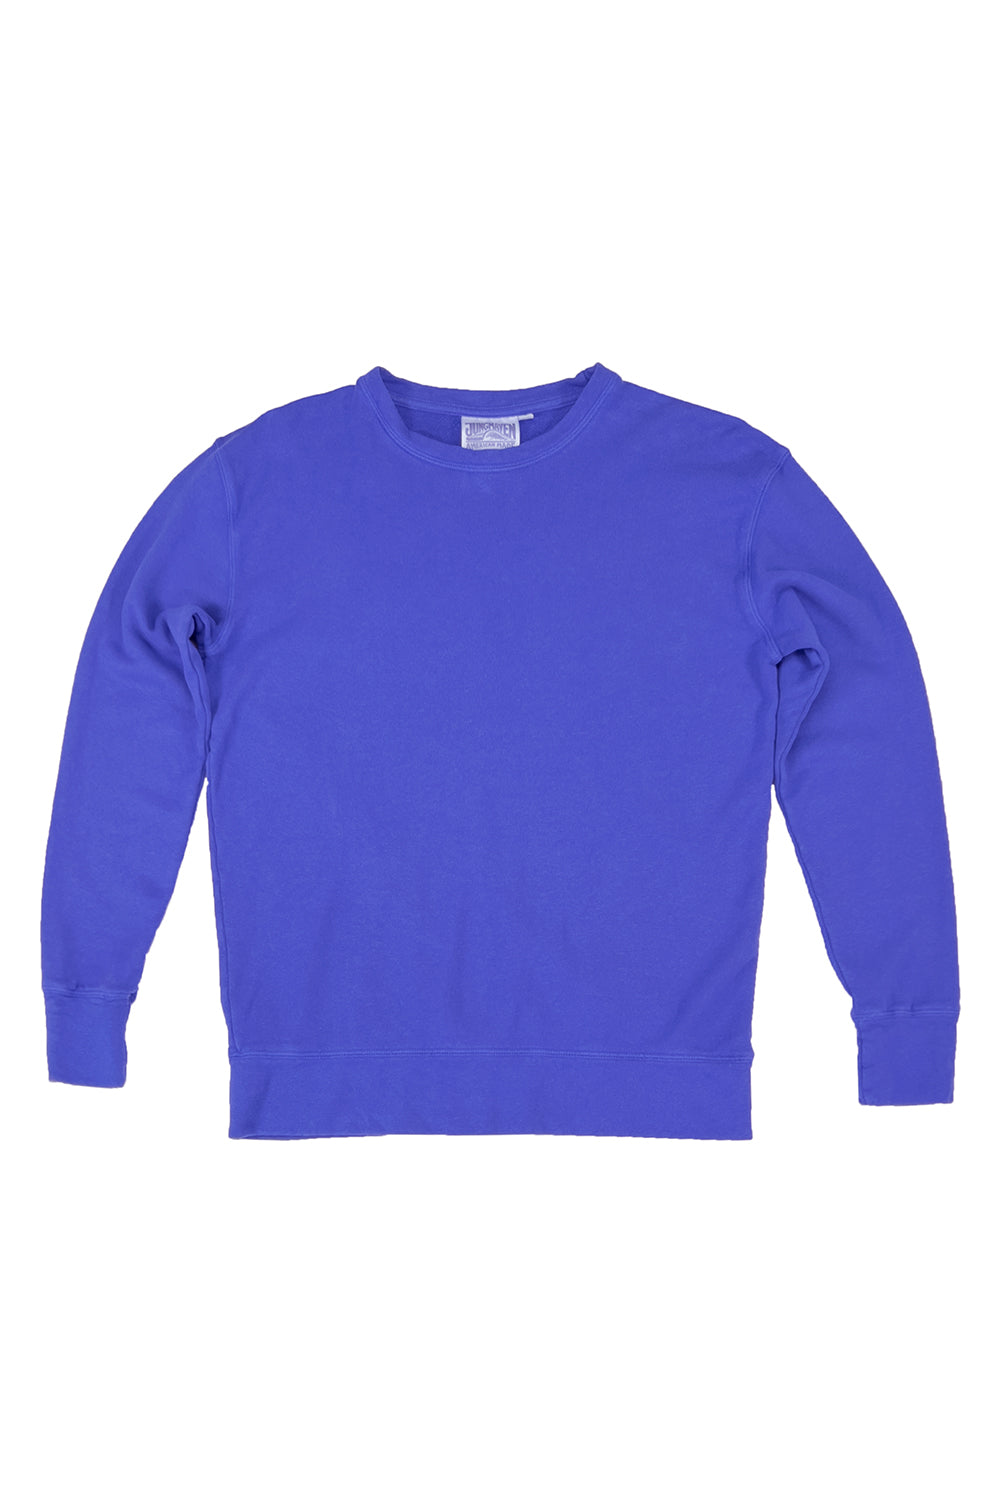 Tahoe Sweatshirt - Sale Colors | Jungmaven Hemp Clothing & Accessories / Color: Grape Soda